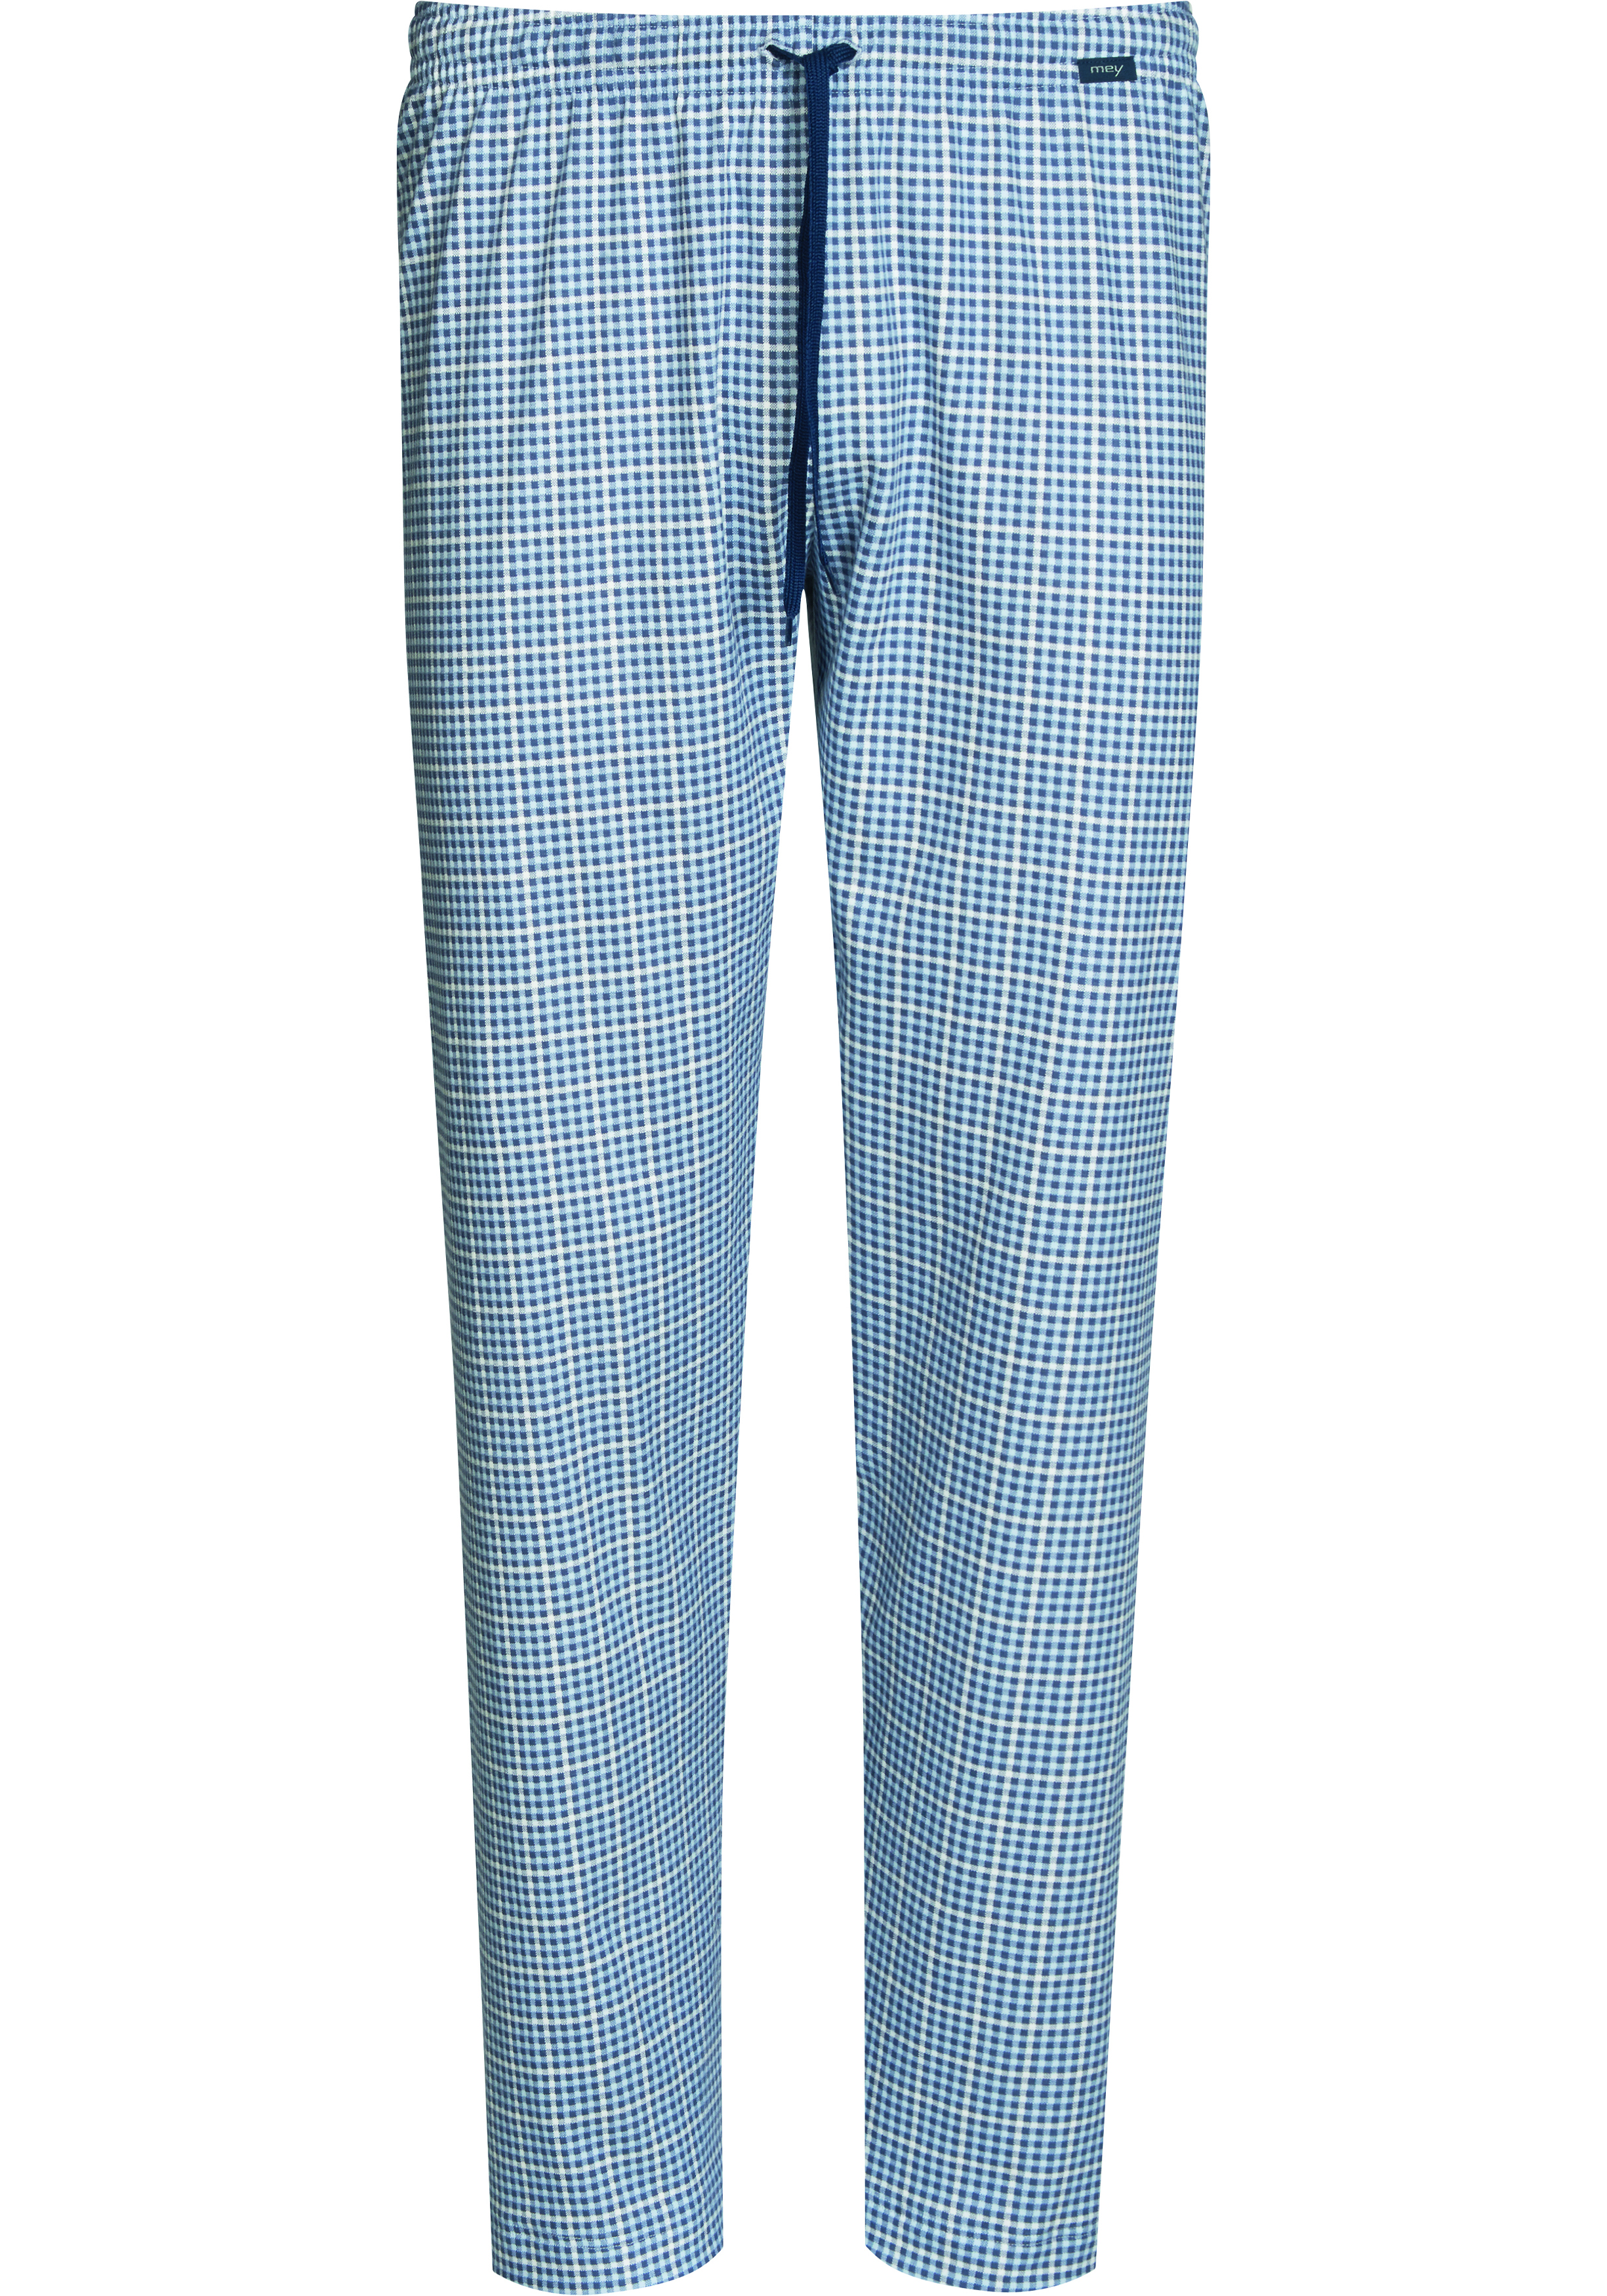 Mey pyjamabroek lang, Redesdale, blauw geruit